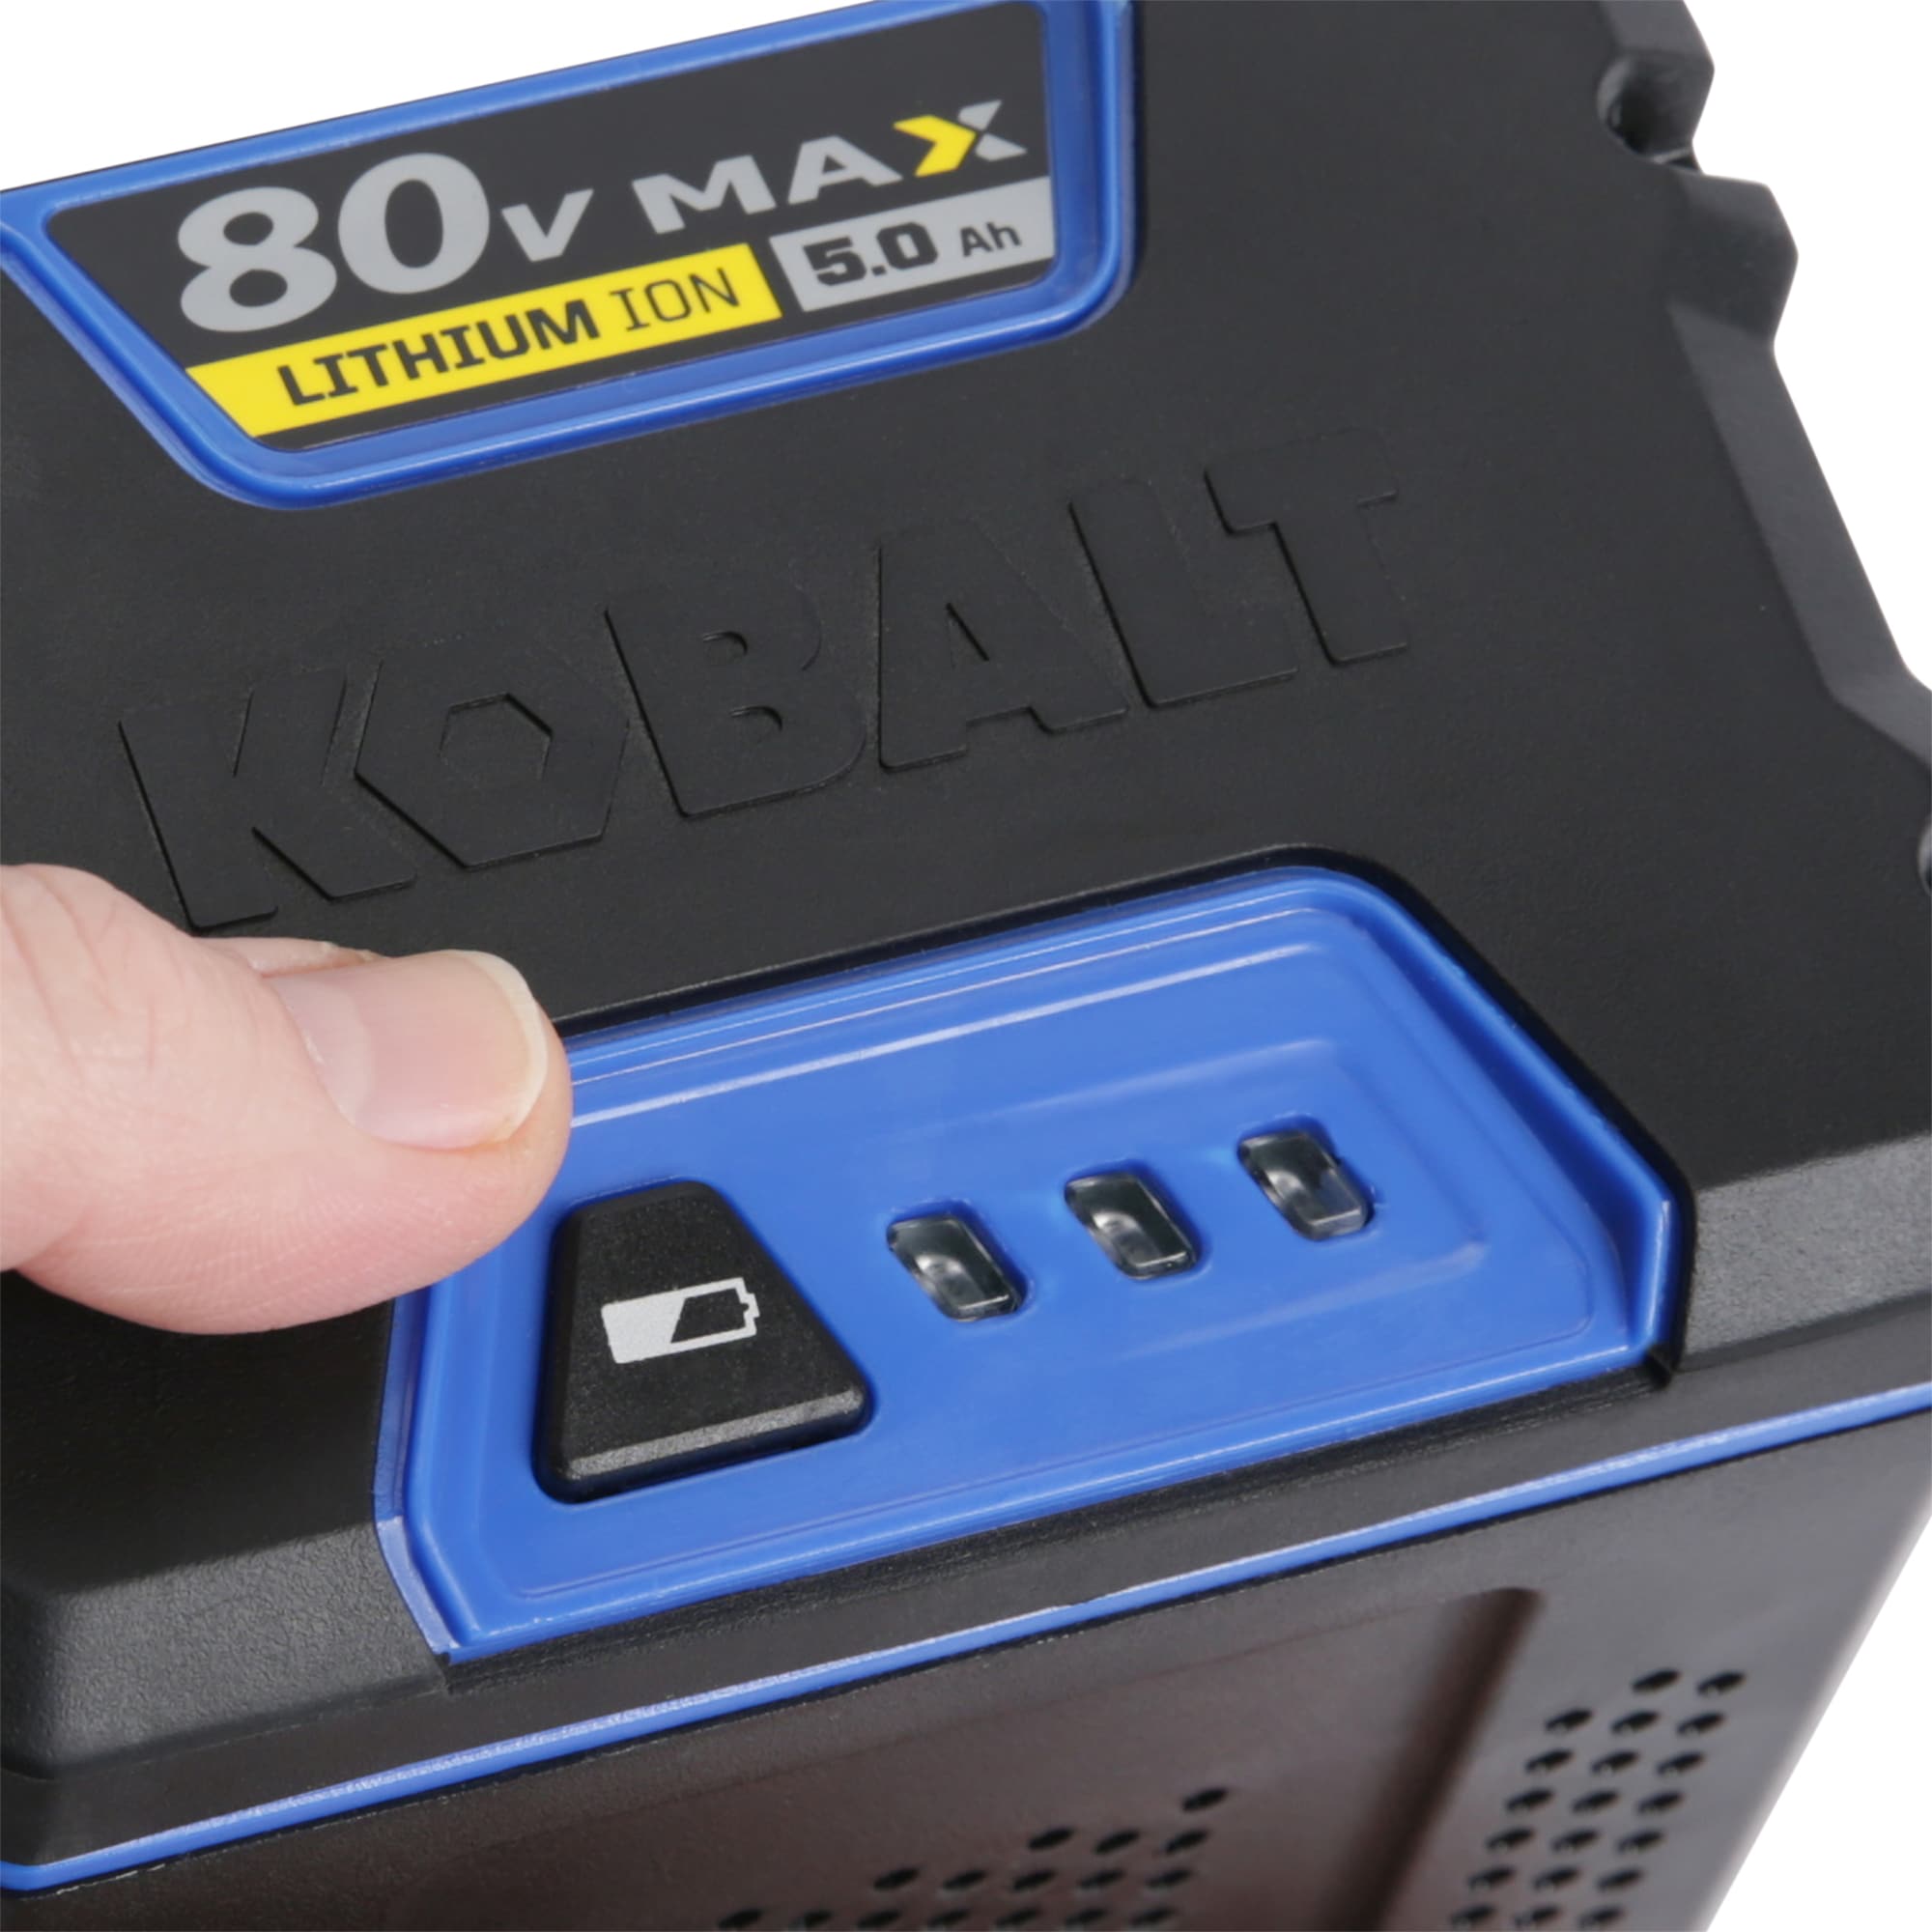 Lowes 80W 2 AH Kobalt 80V MAX 2.5 AH Battery Brand new Genuine NOT a refurb 